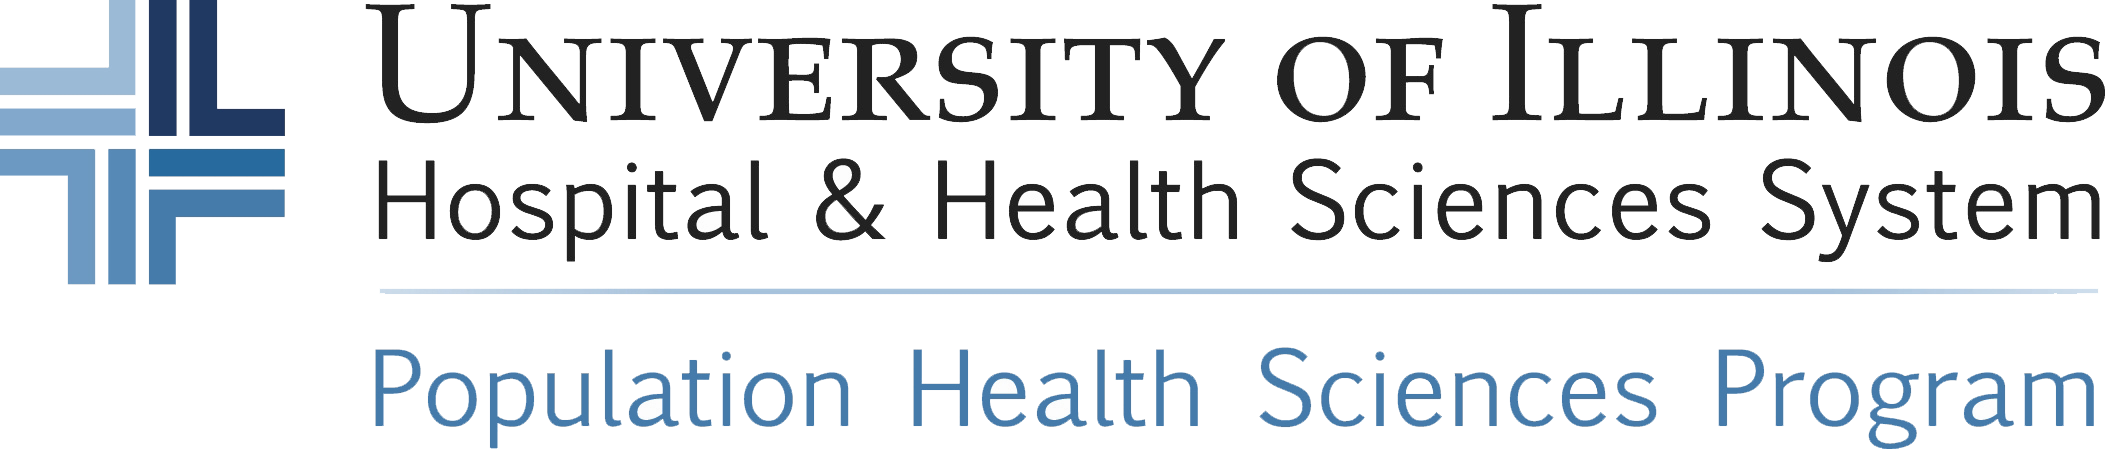 UIC Hospital and Health Sciences System: Population Health Sciences Program